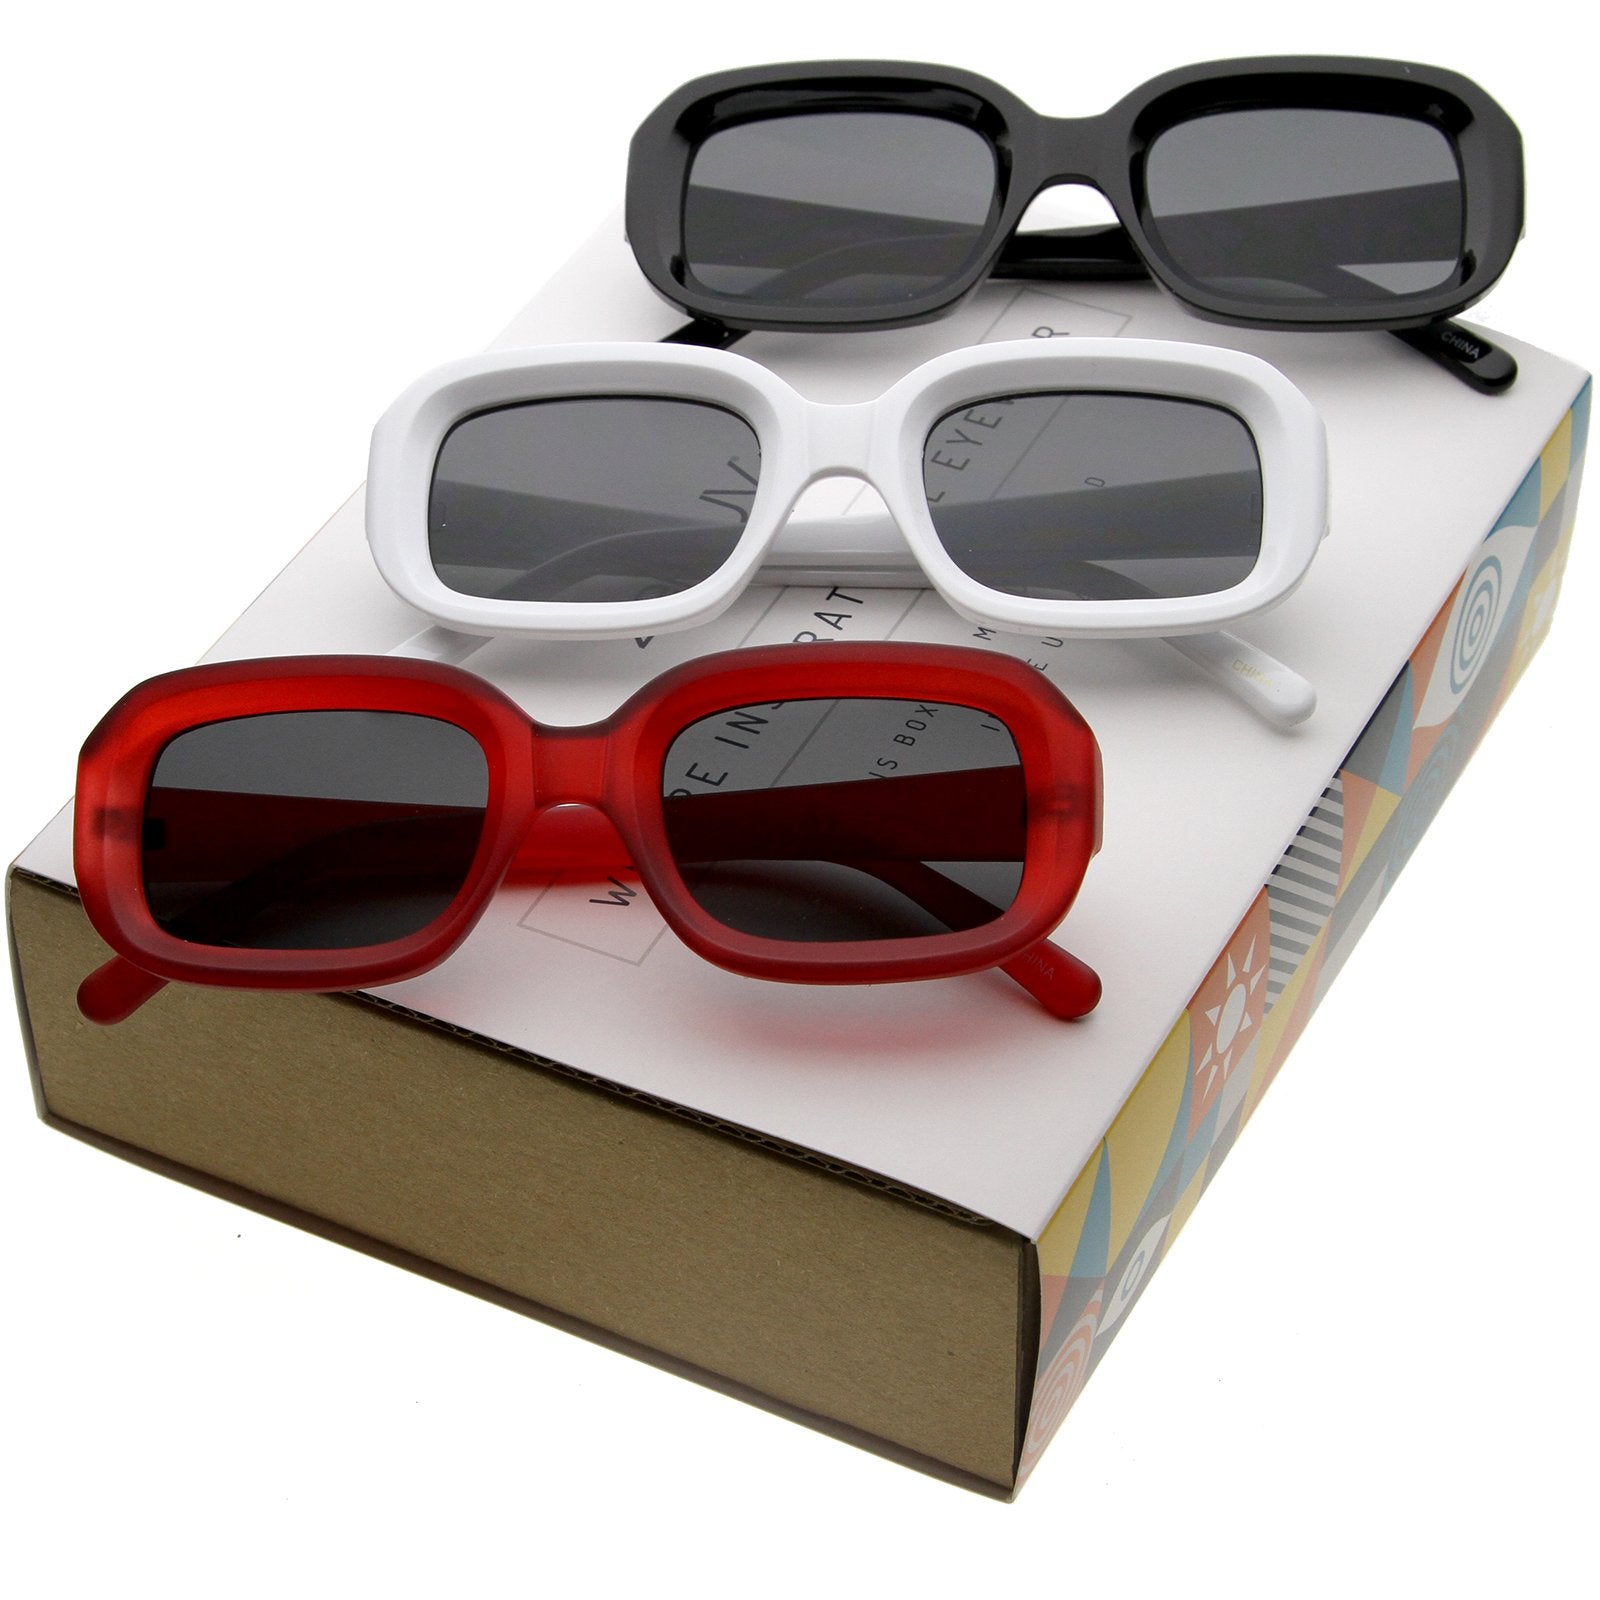 Retro Mid Century Modern Thick Square Frame Sunglasses C673 [Promo Box]